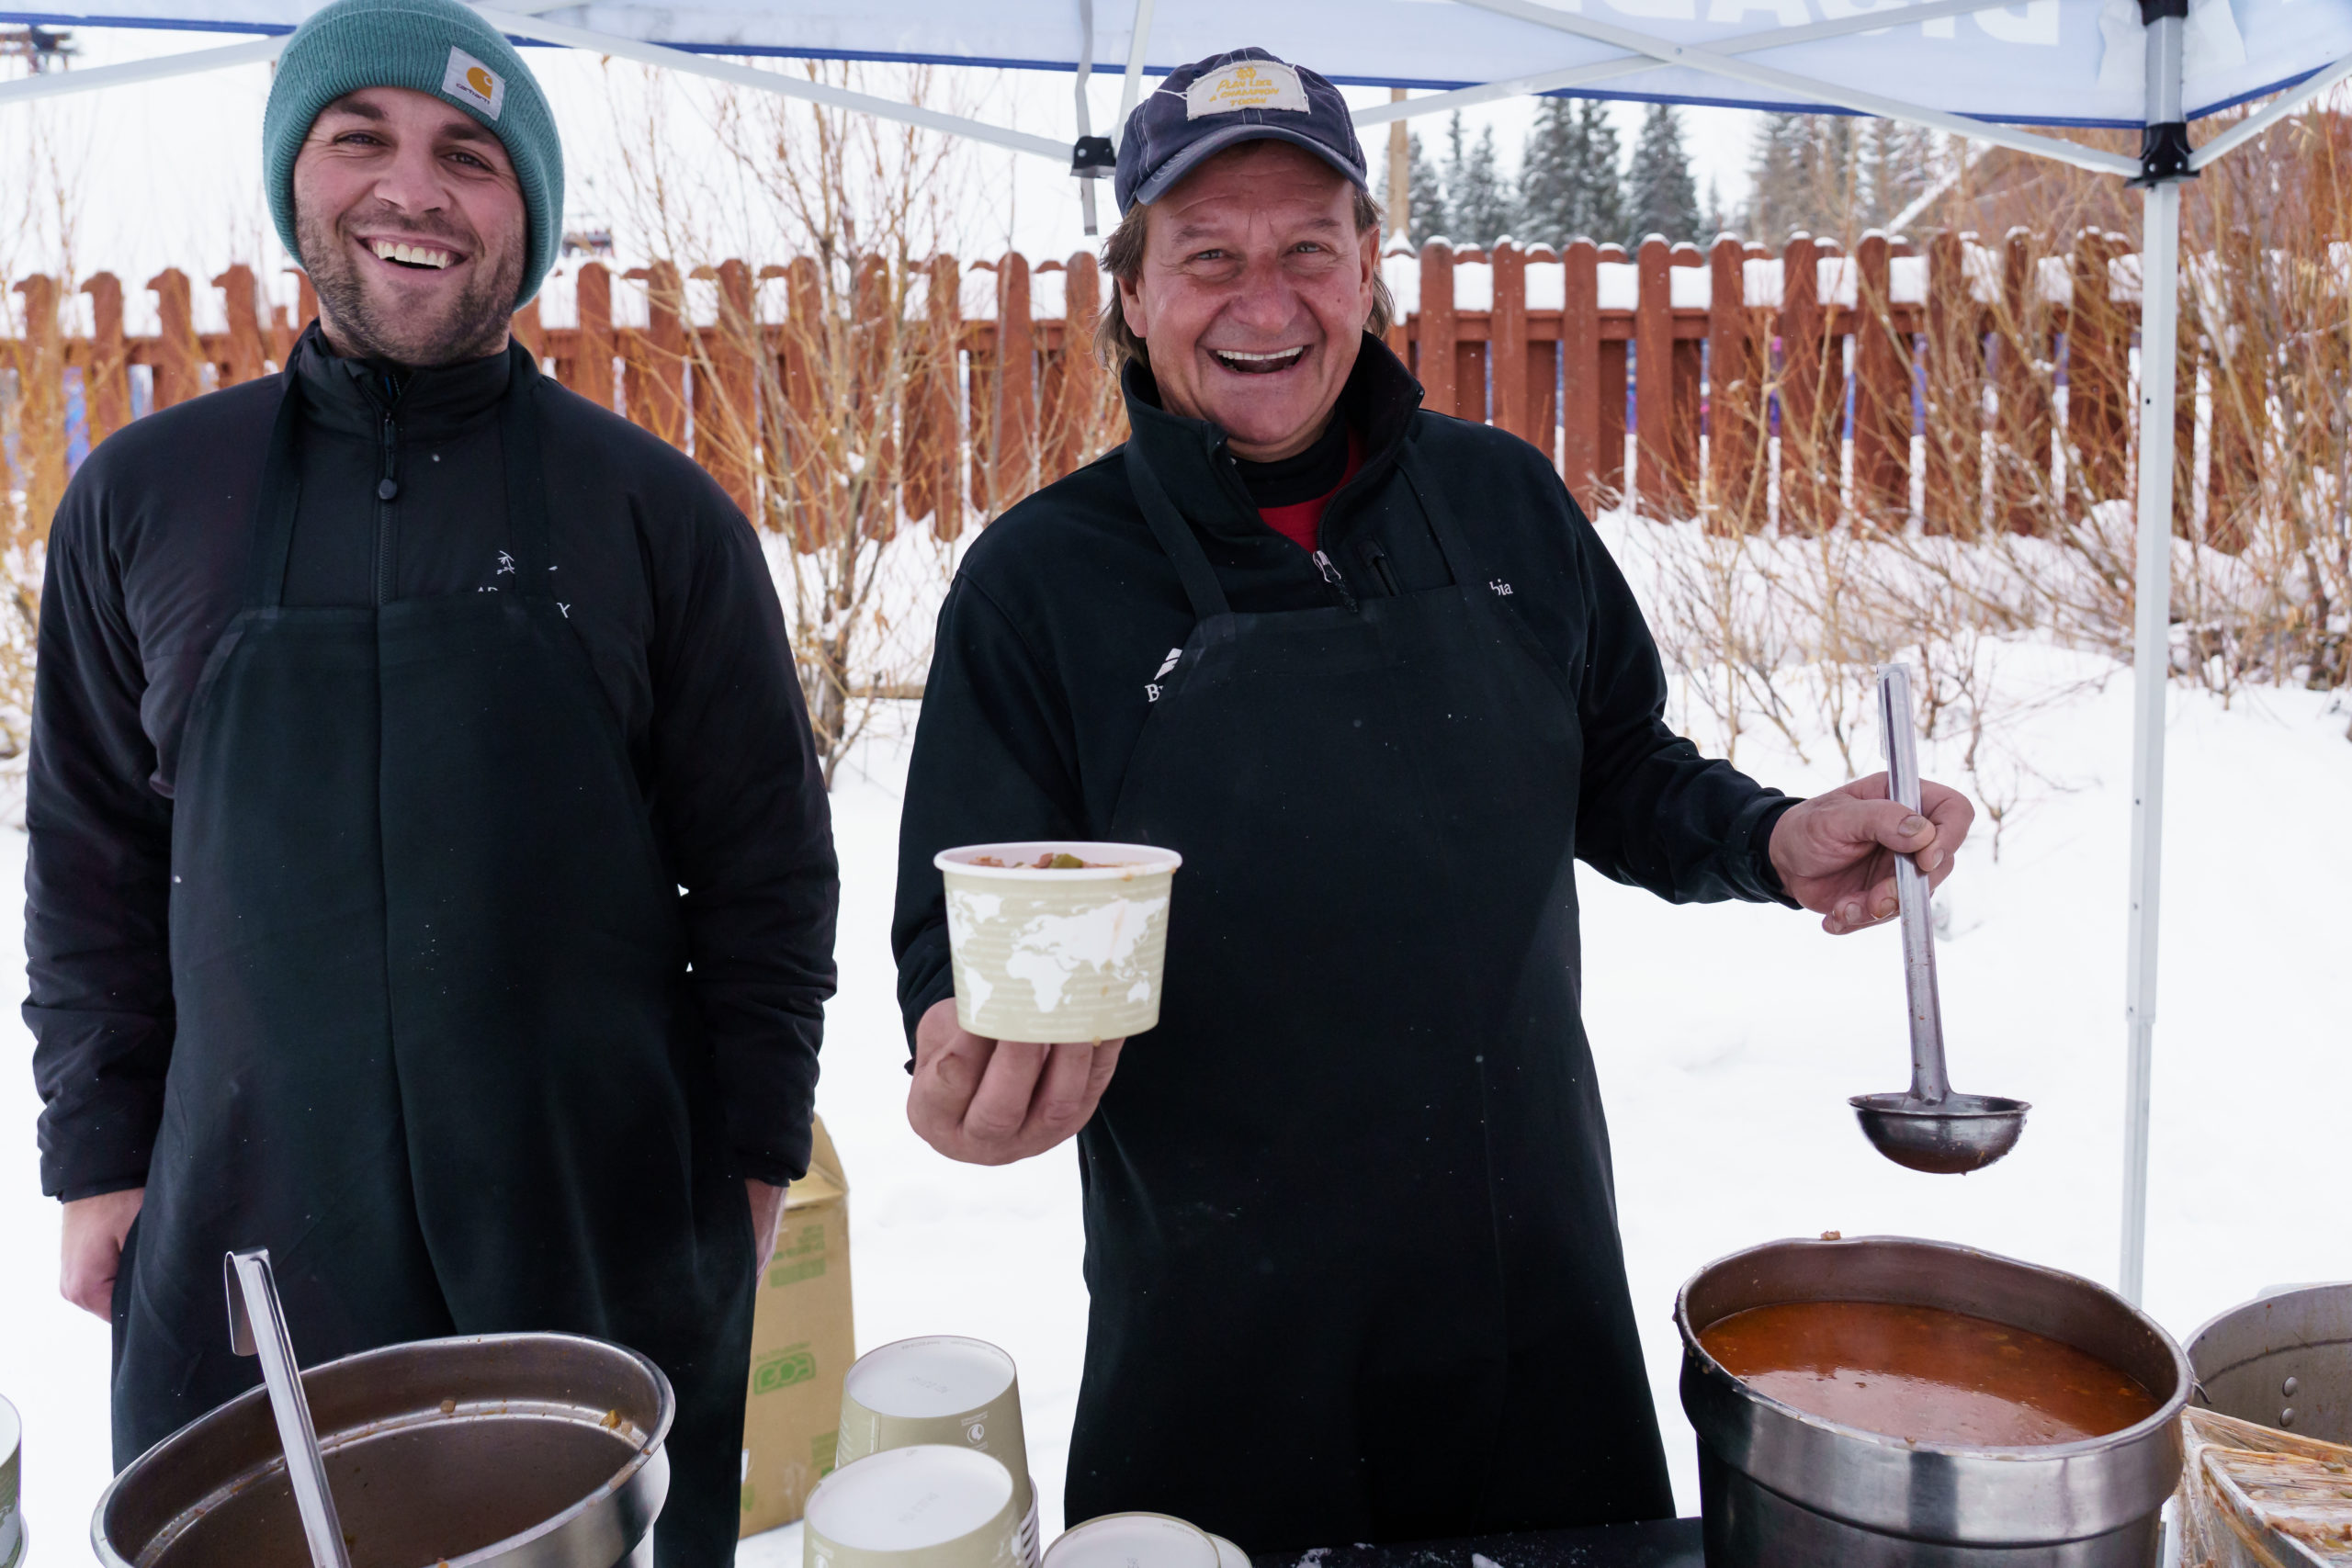 Ski Spec volunteers smiling and serving soup